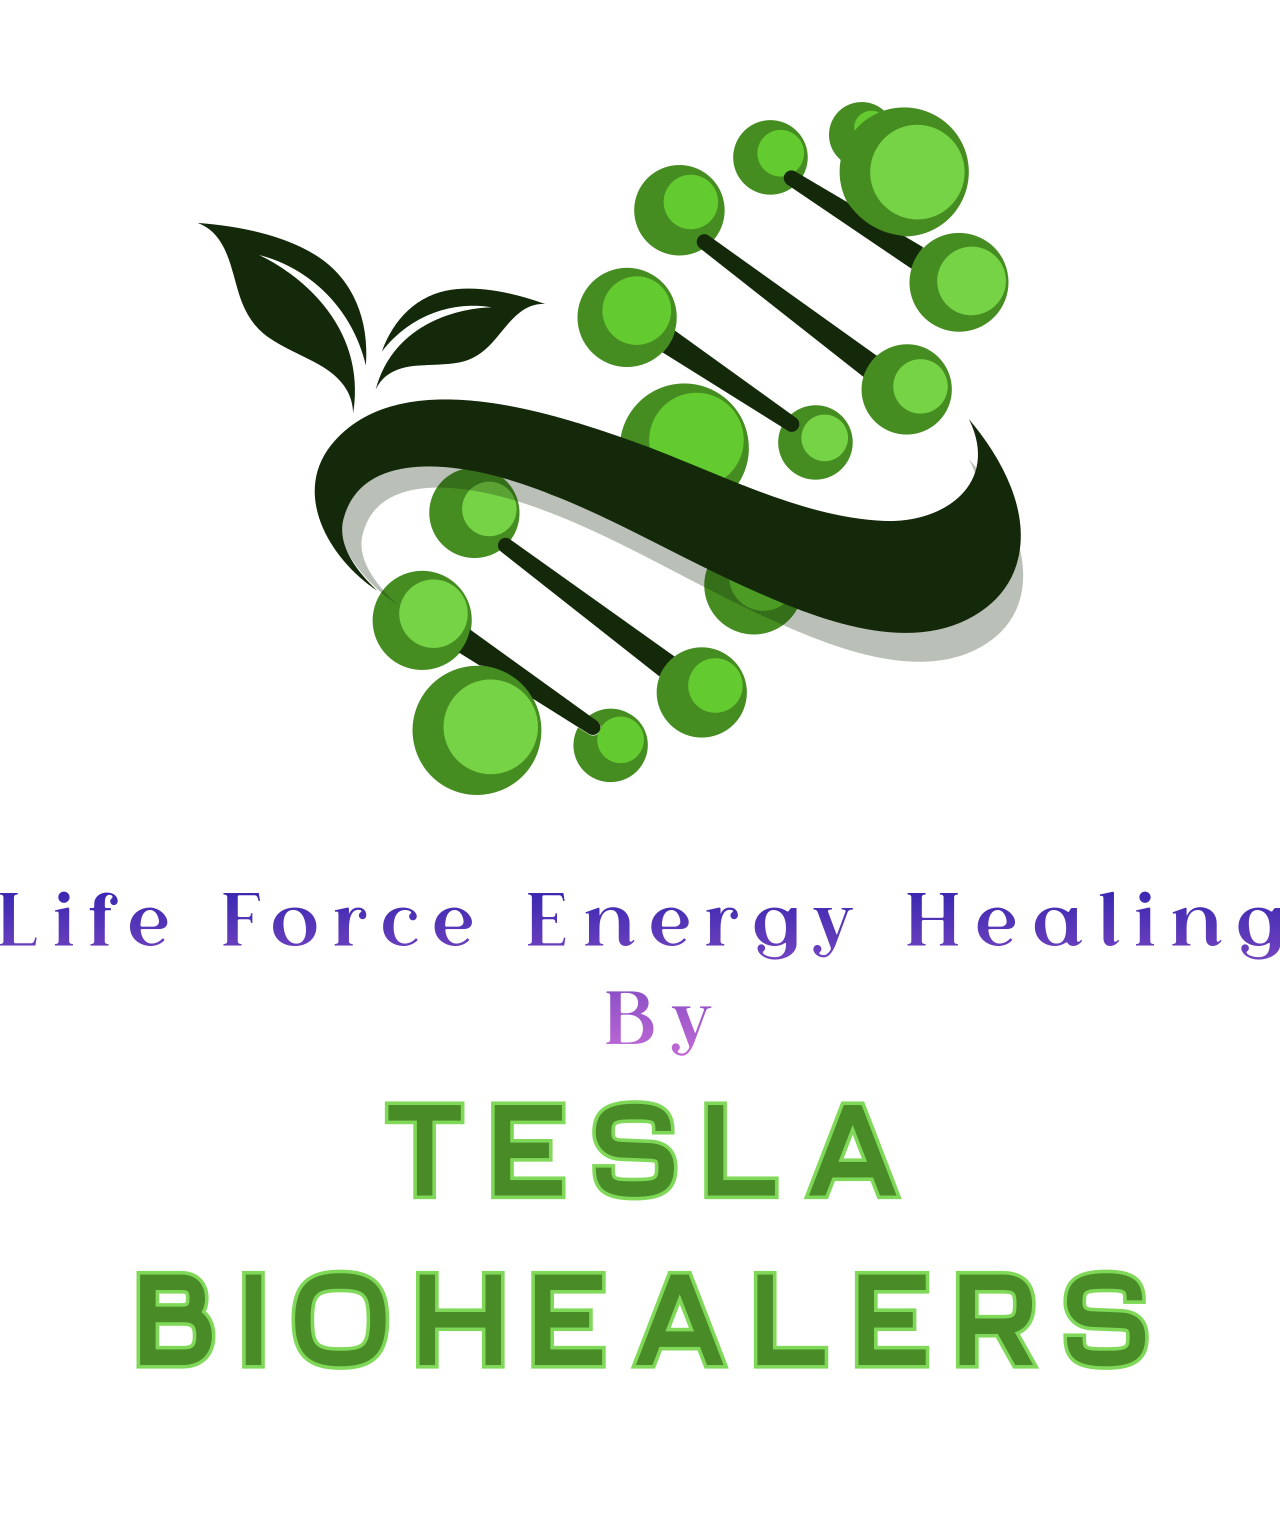 Life Force Energy Healing By Tesla Biohealing's logo